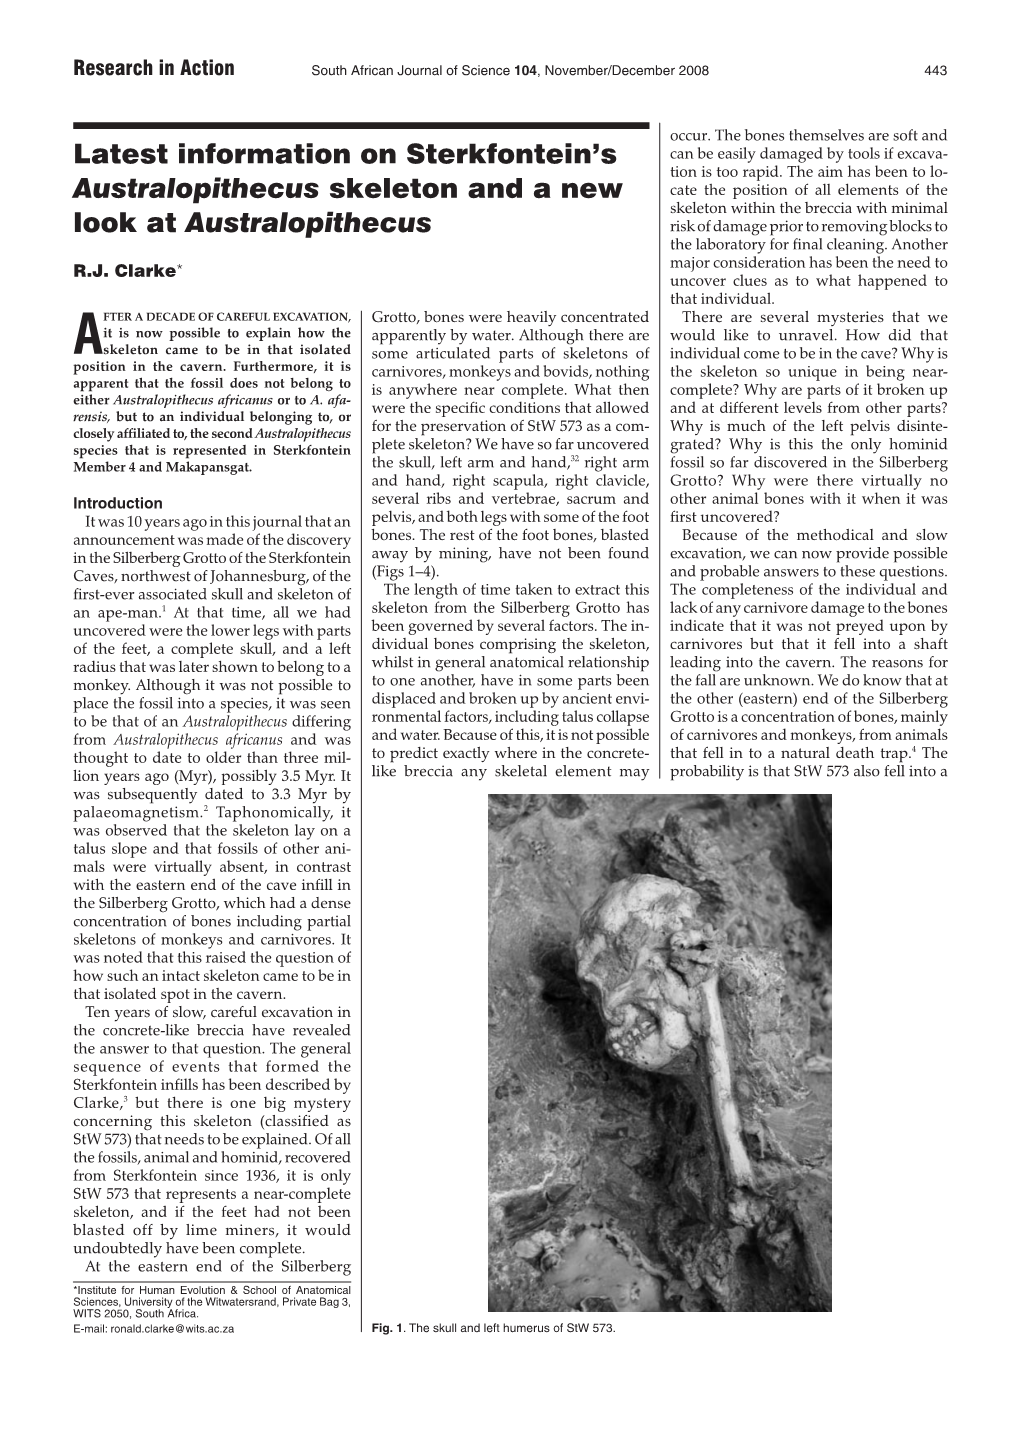 Latest Information on Sterkfontein's Australopithecus Skeleton and A